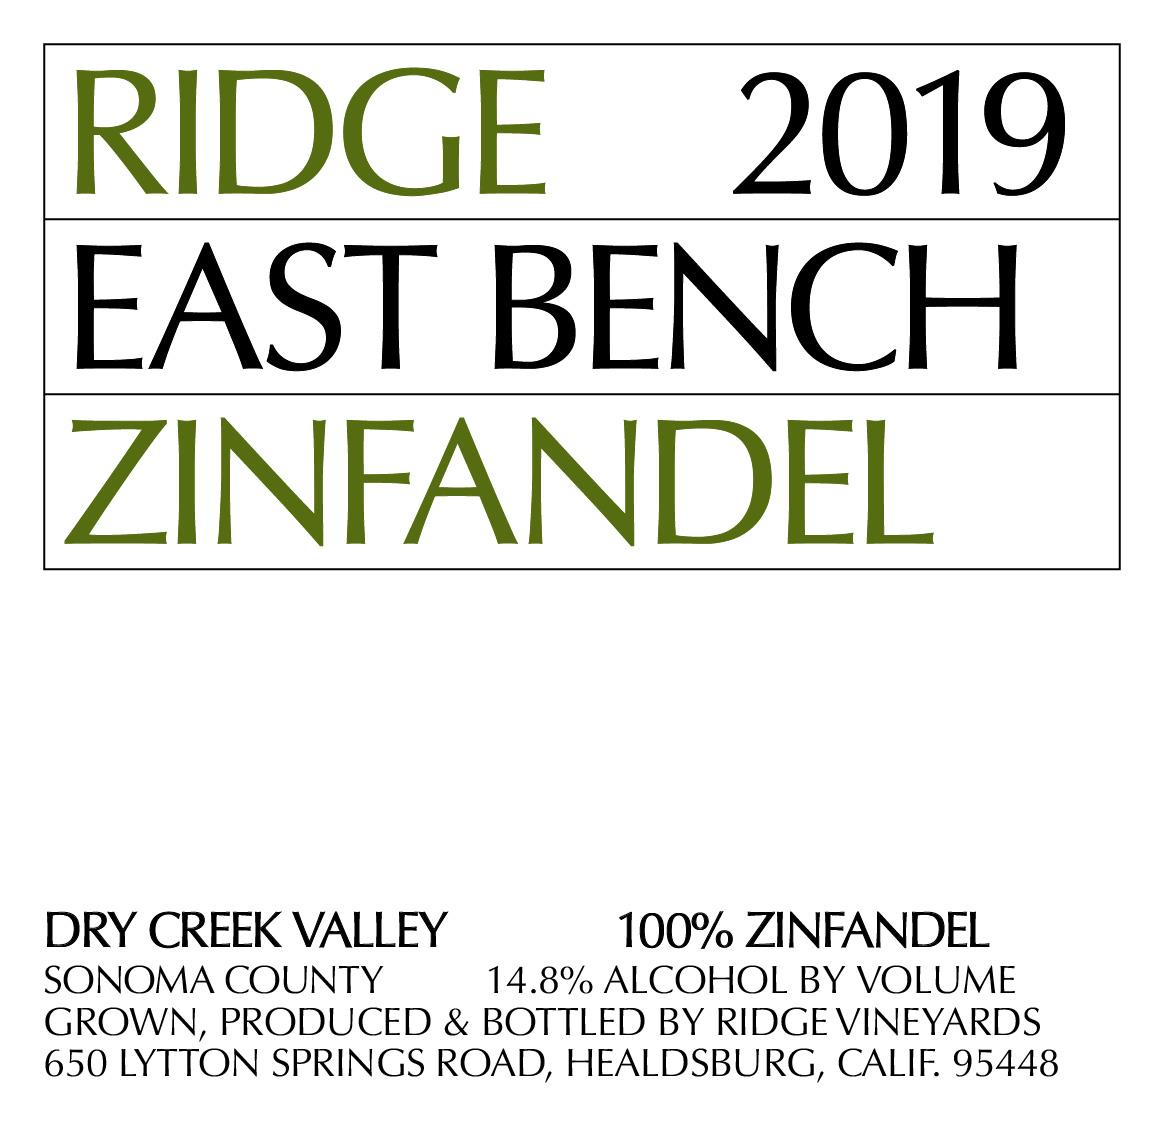 2019 Ridge Zinfandel East Bench - click image for full description